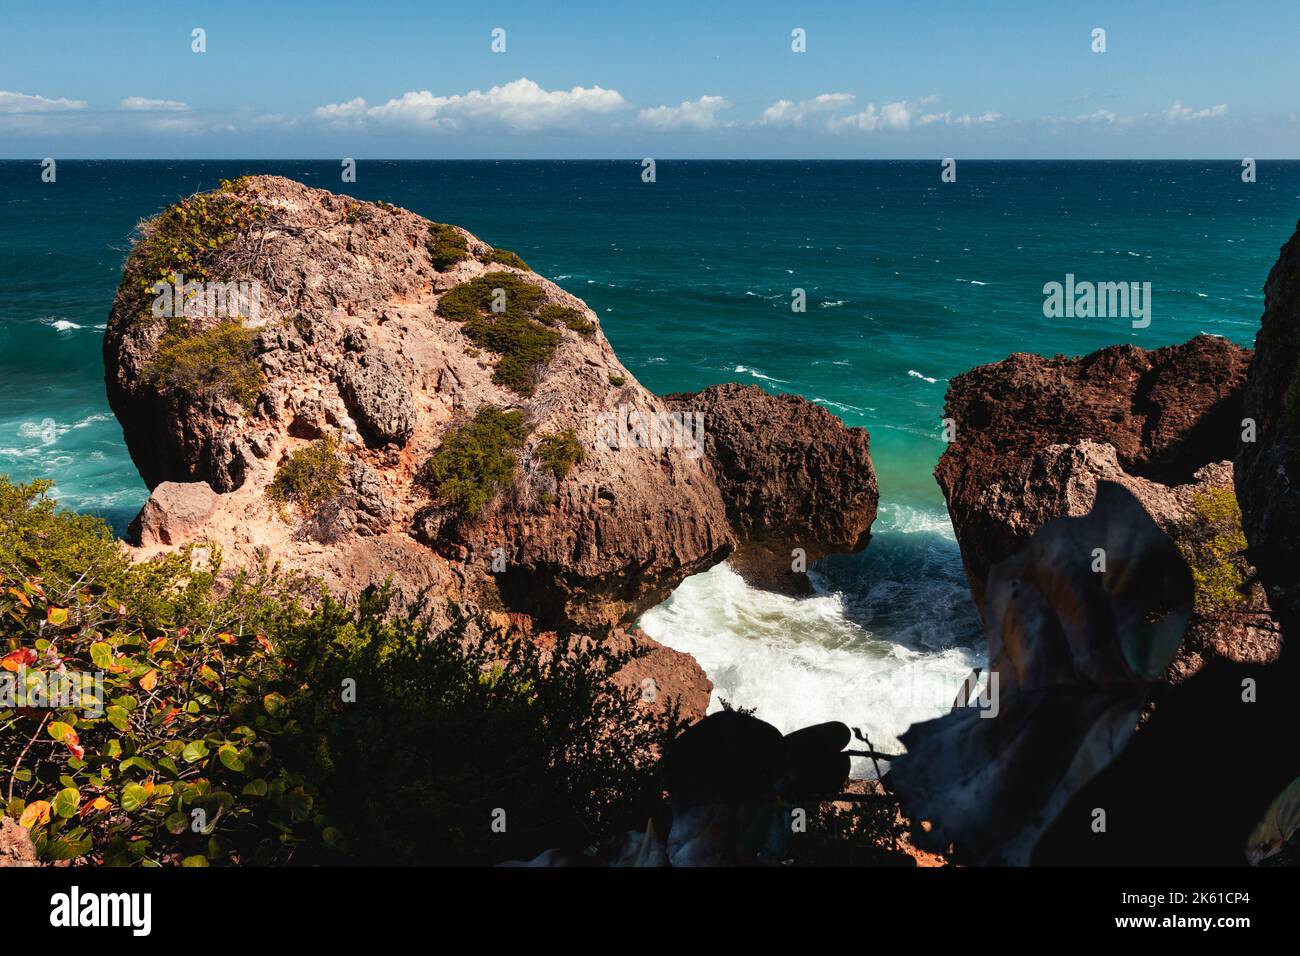 Puerto rico Aguadilla survival beach coast with amazing huge rocks formation Stock Photo